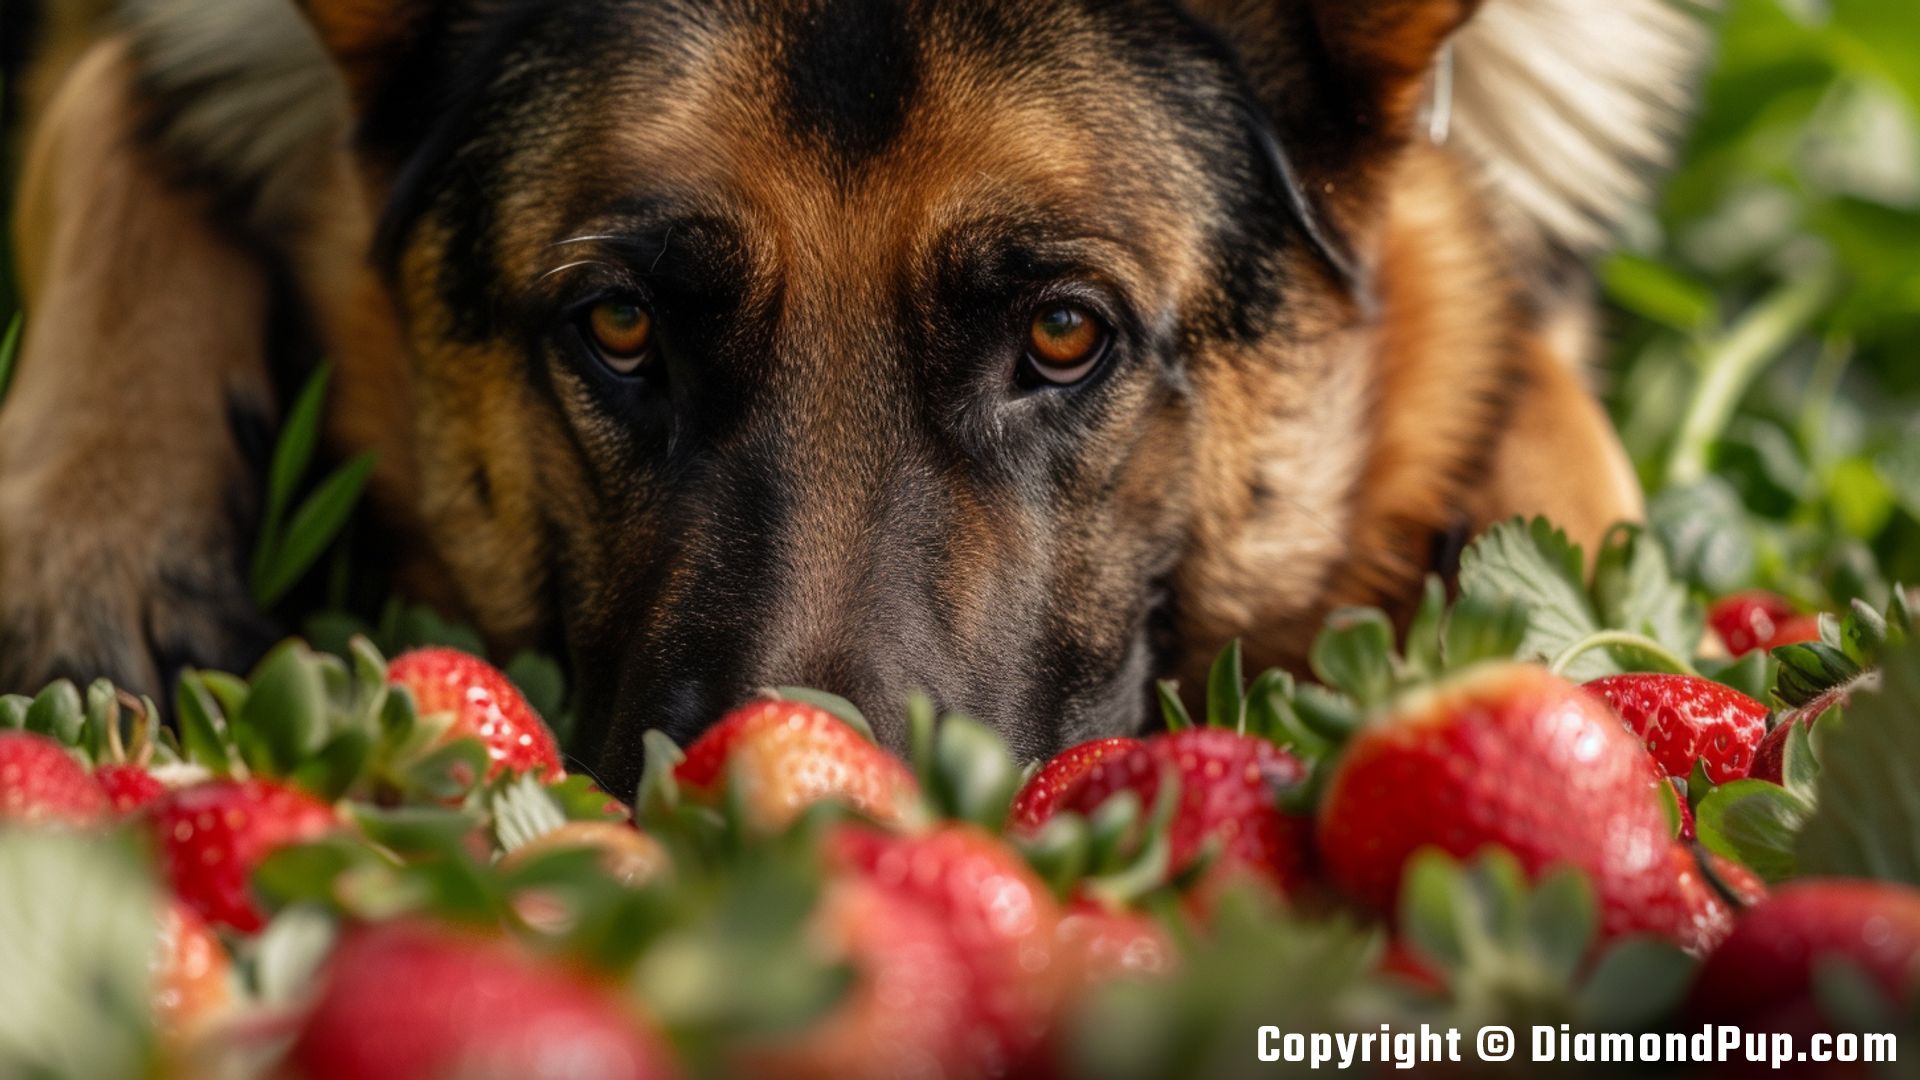 Image of a Playful German Shepherd Snacking on Strawberries